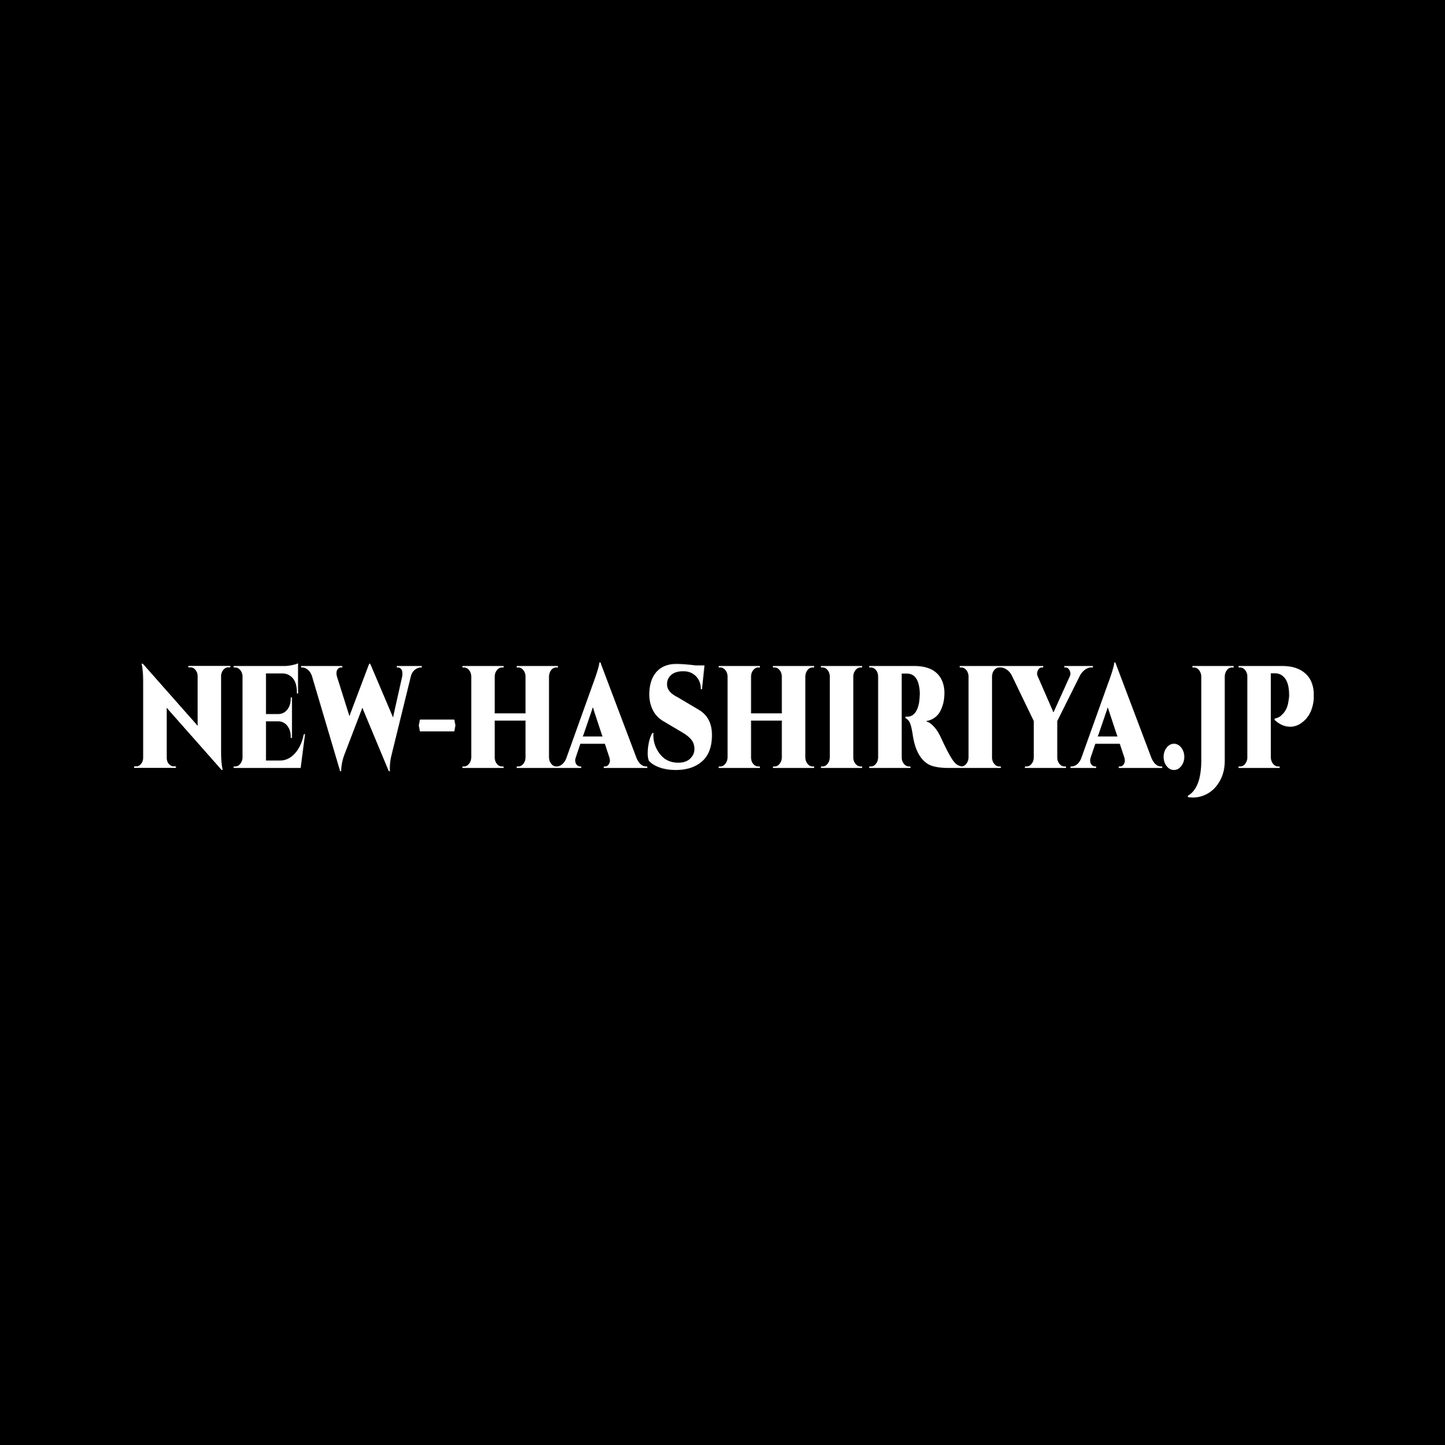 'NEW-HASHIRIYA' Bold Reflective White Sticker